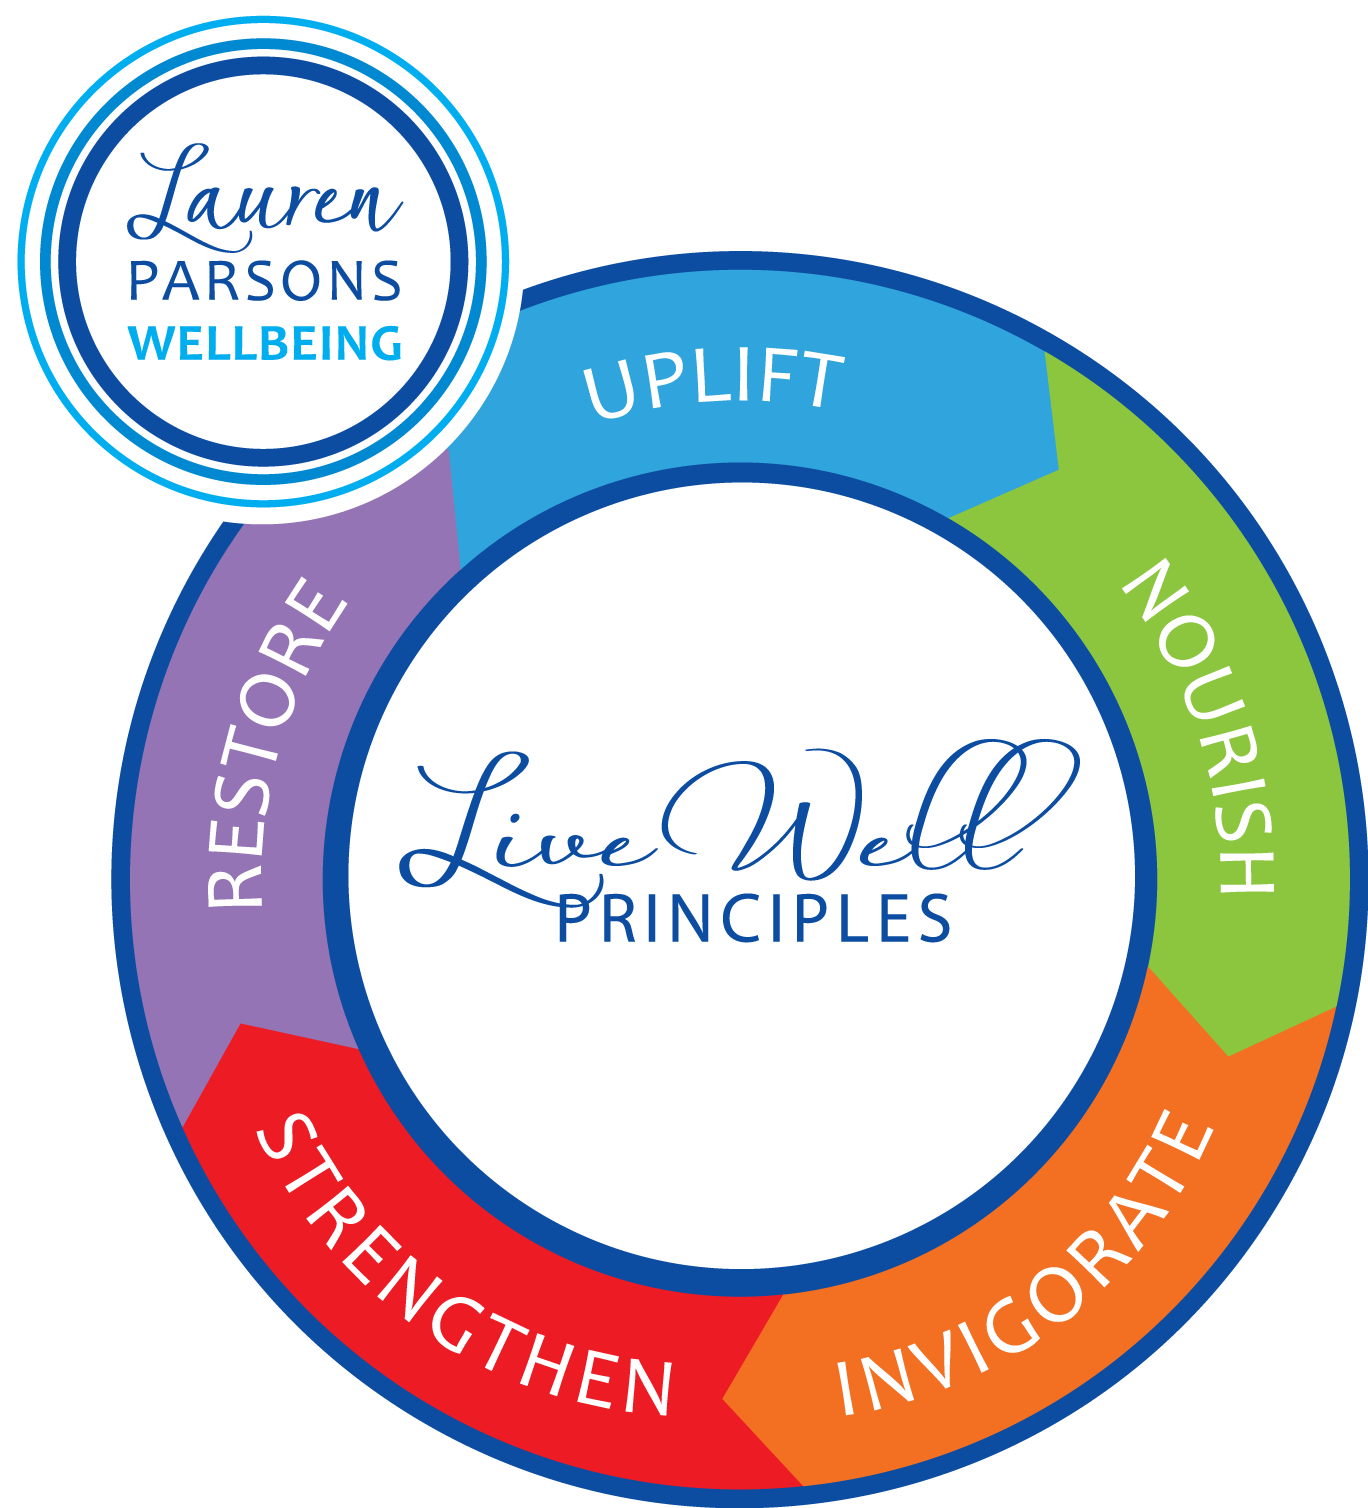 Lauren Parsons Live Well Principles Logo